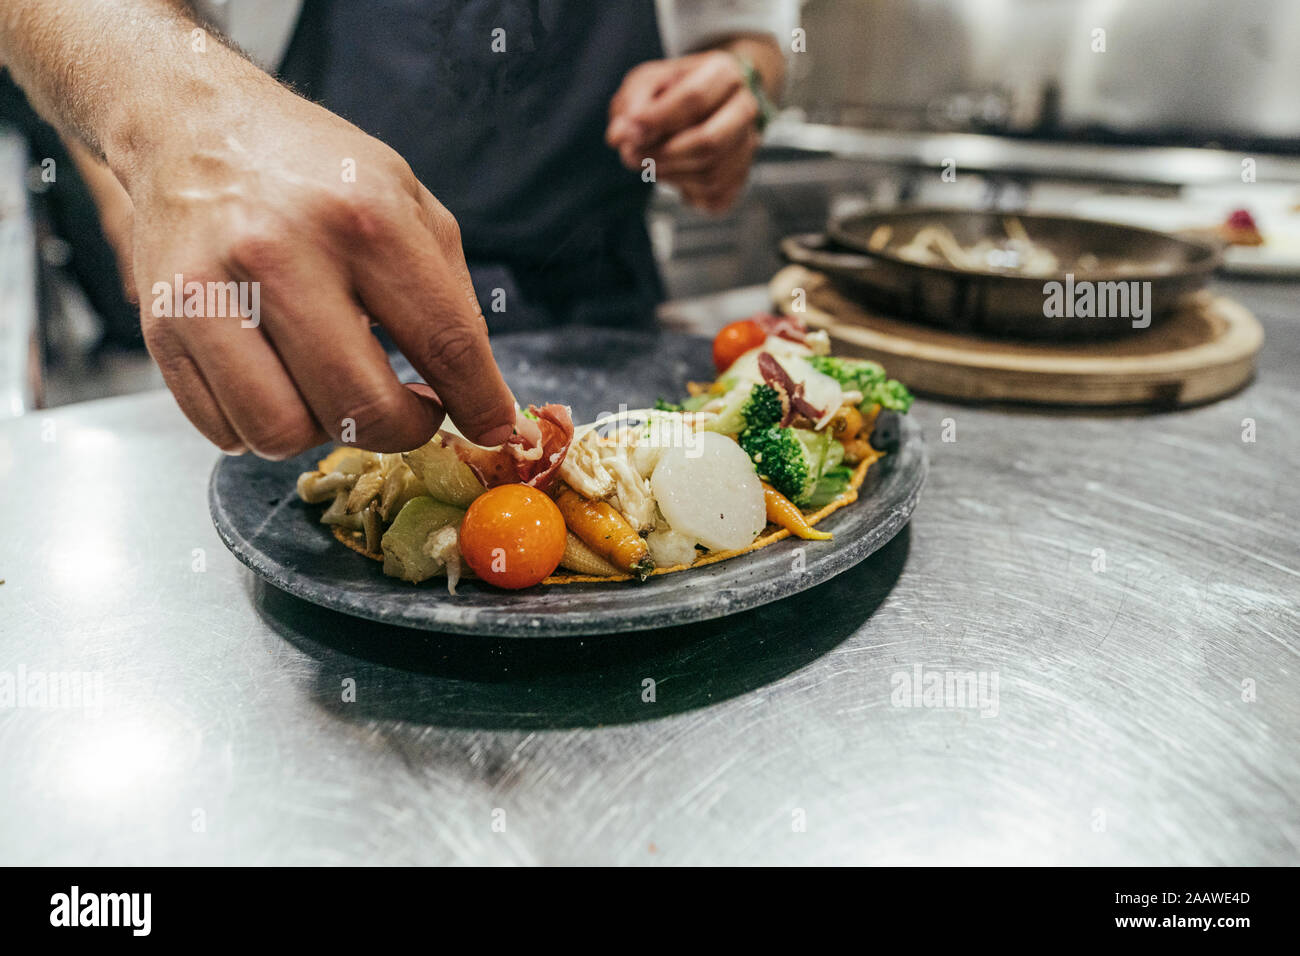 Chef garnishing plate with food Stock Photo